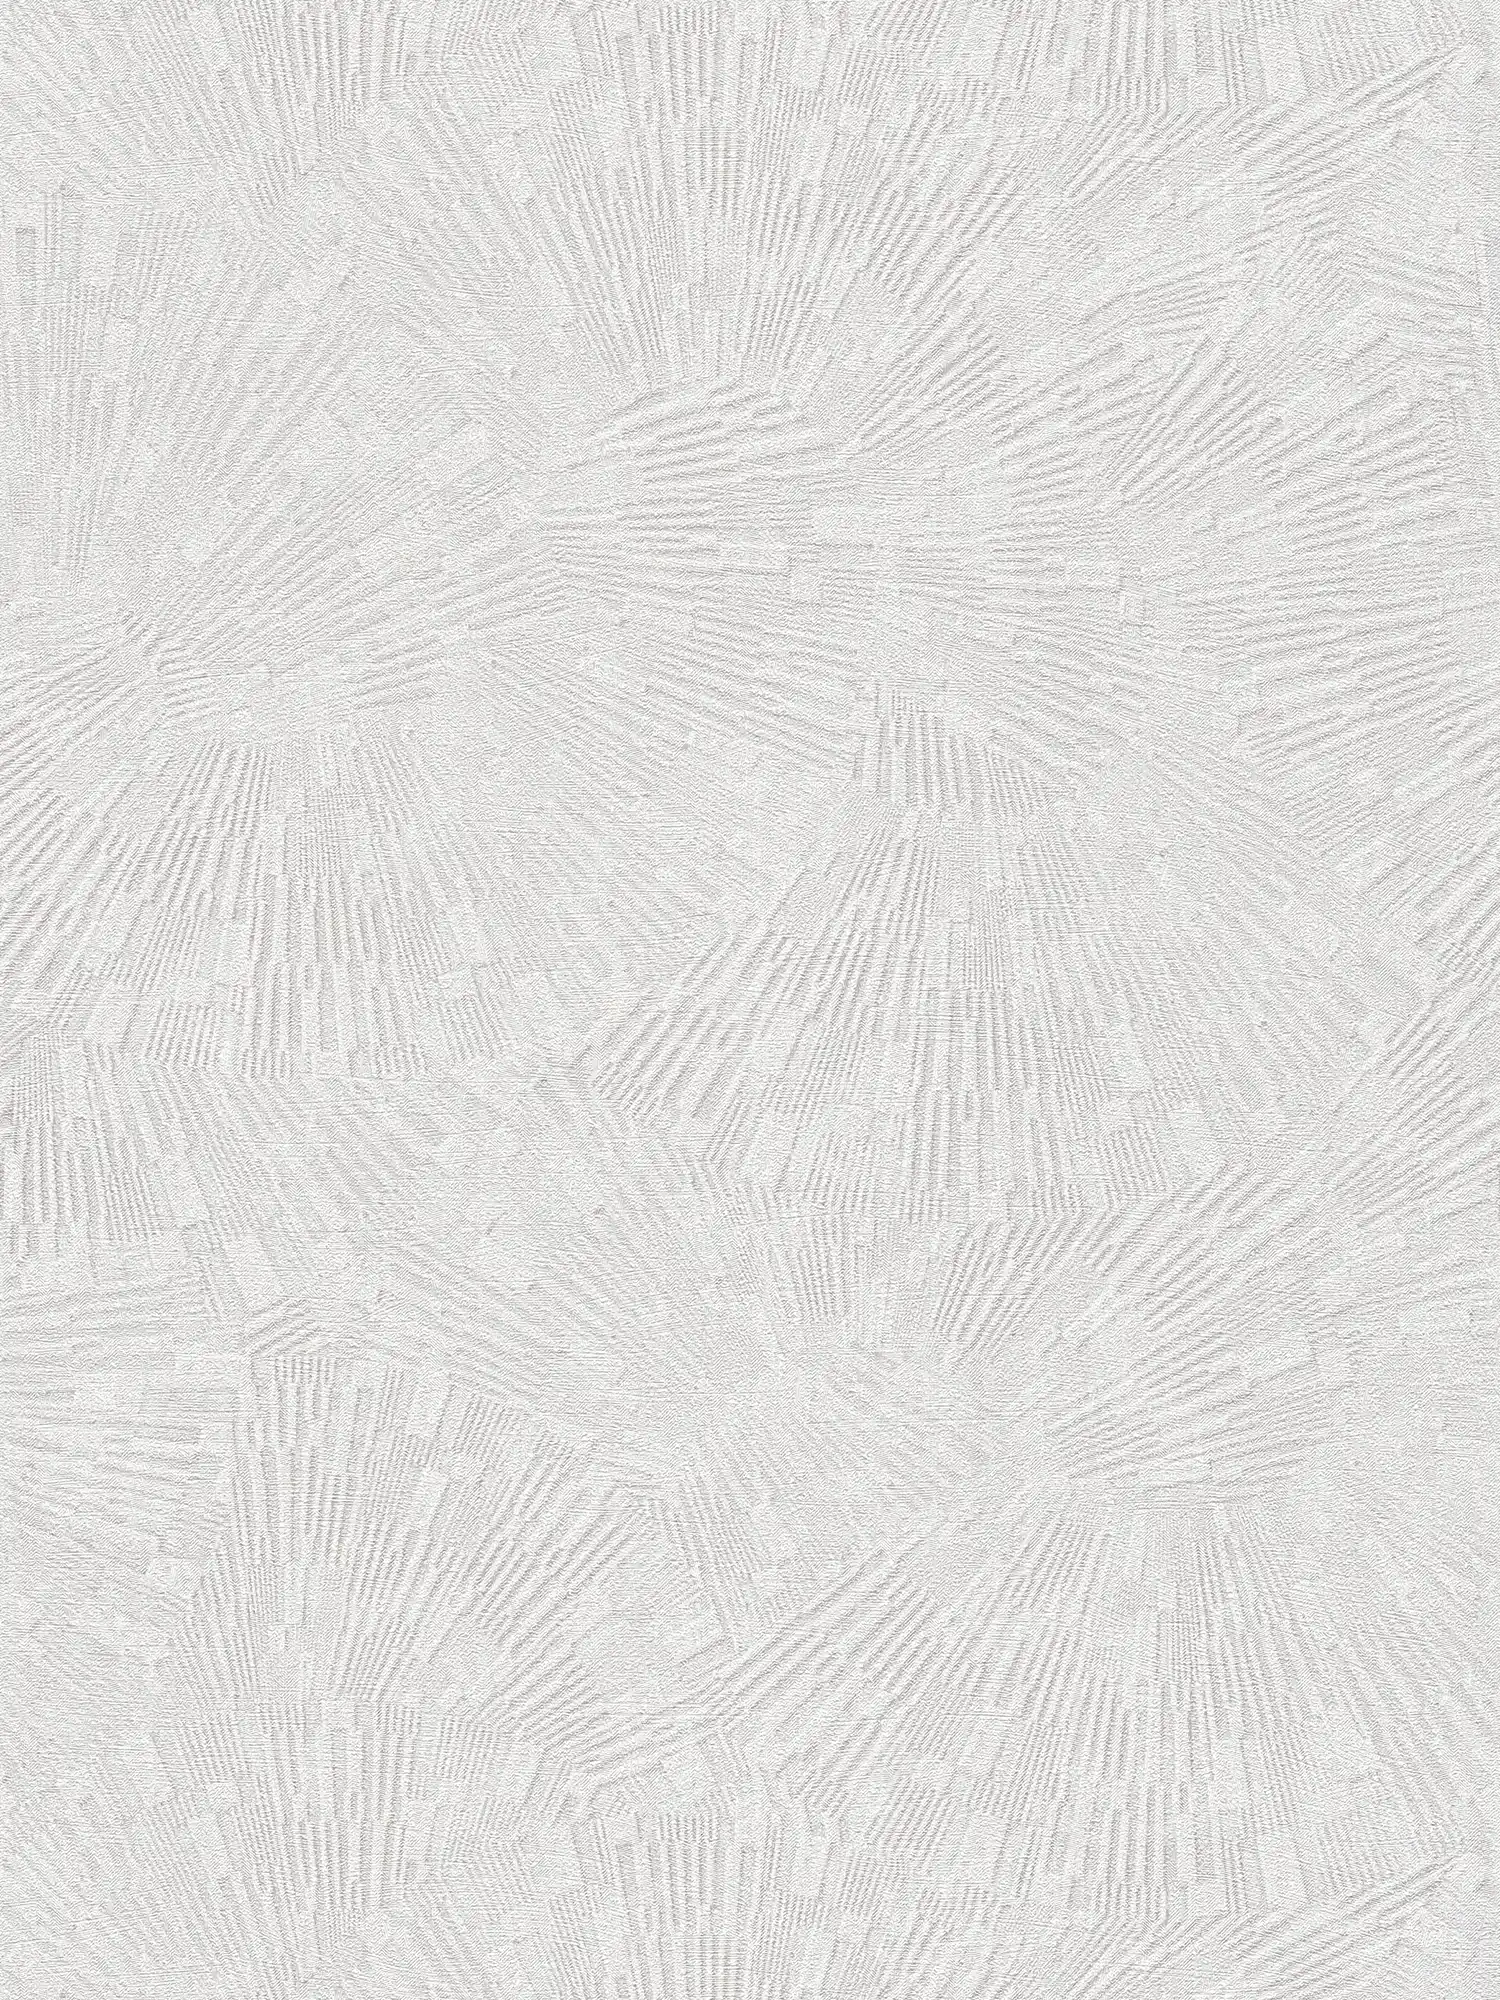 Non-woven wallpaper with graphic pattern in retro style - beige, cream
